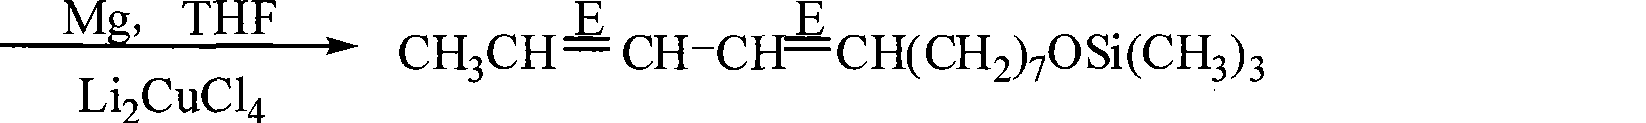 Preparation of (8E, 10E)-8,10- dodecadienol-1-alcohol